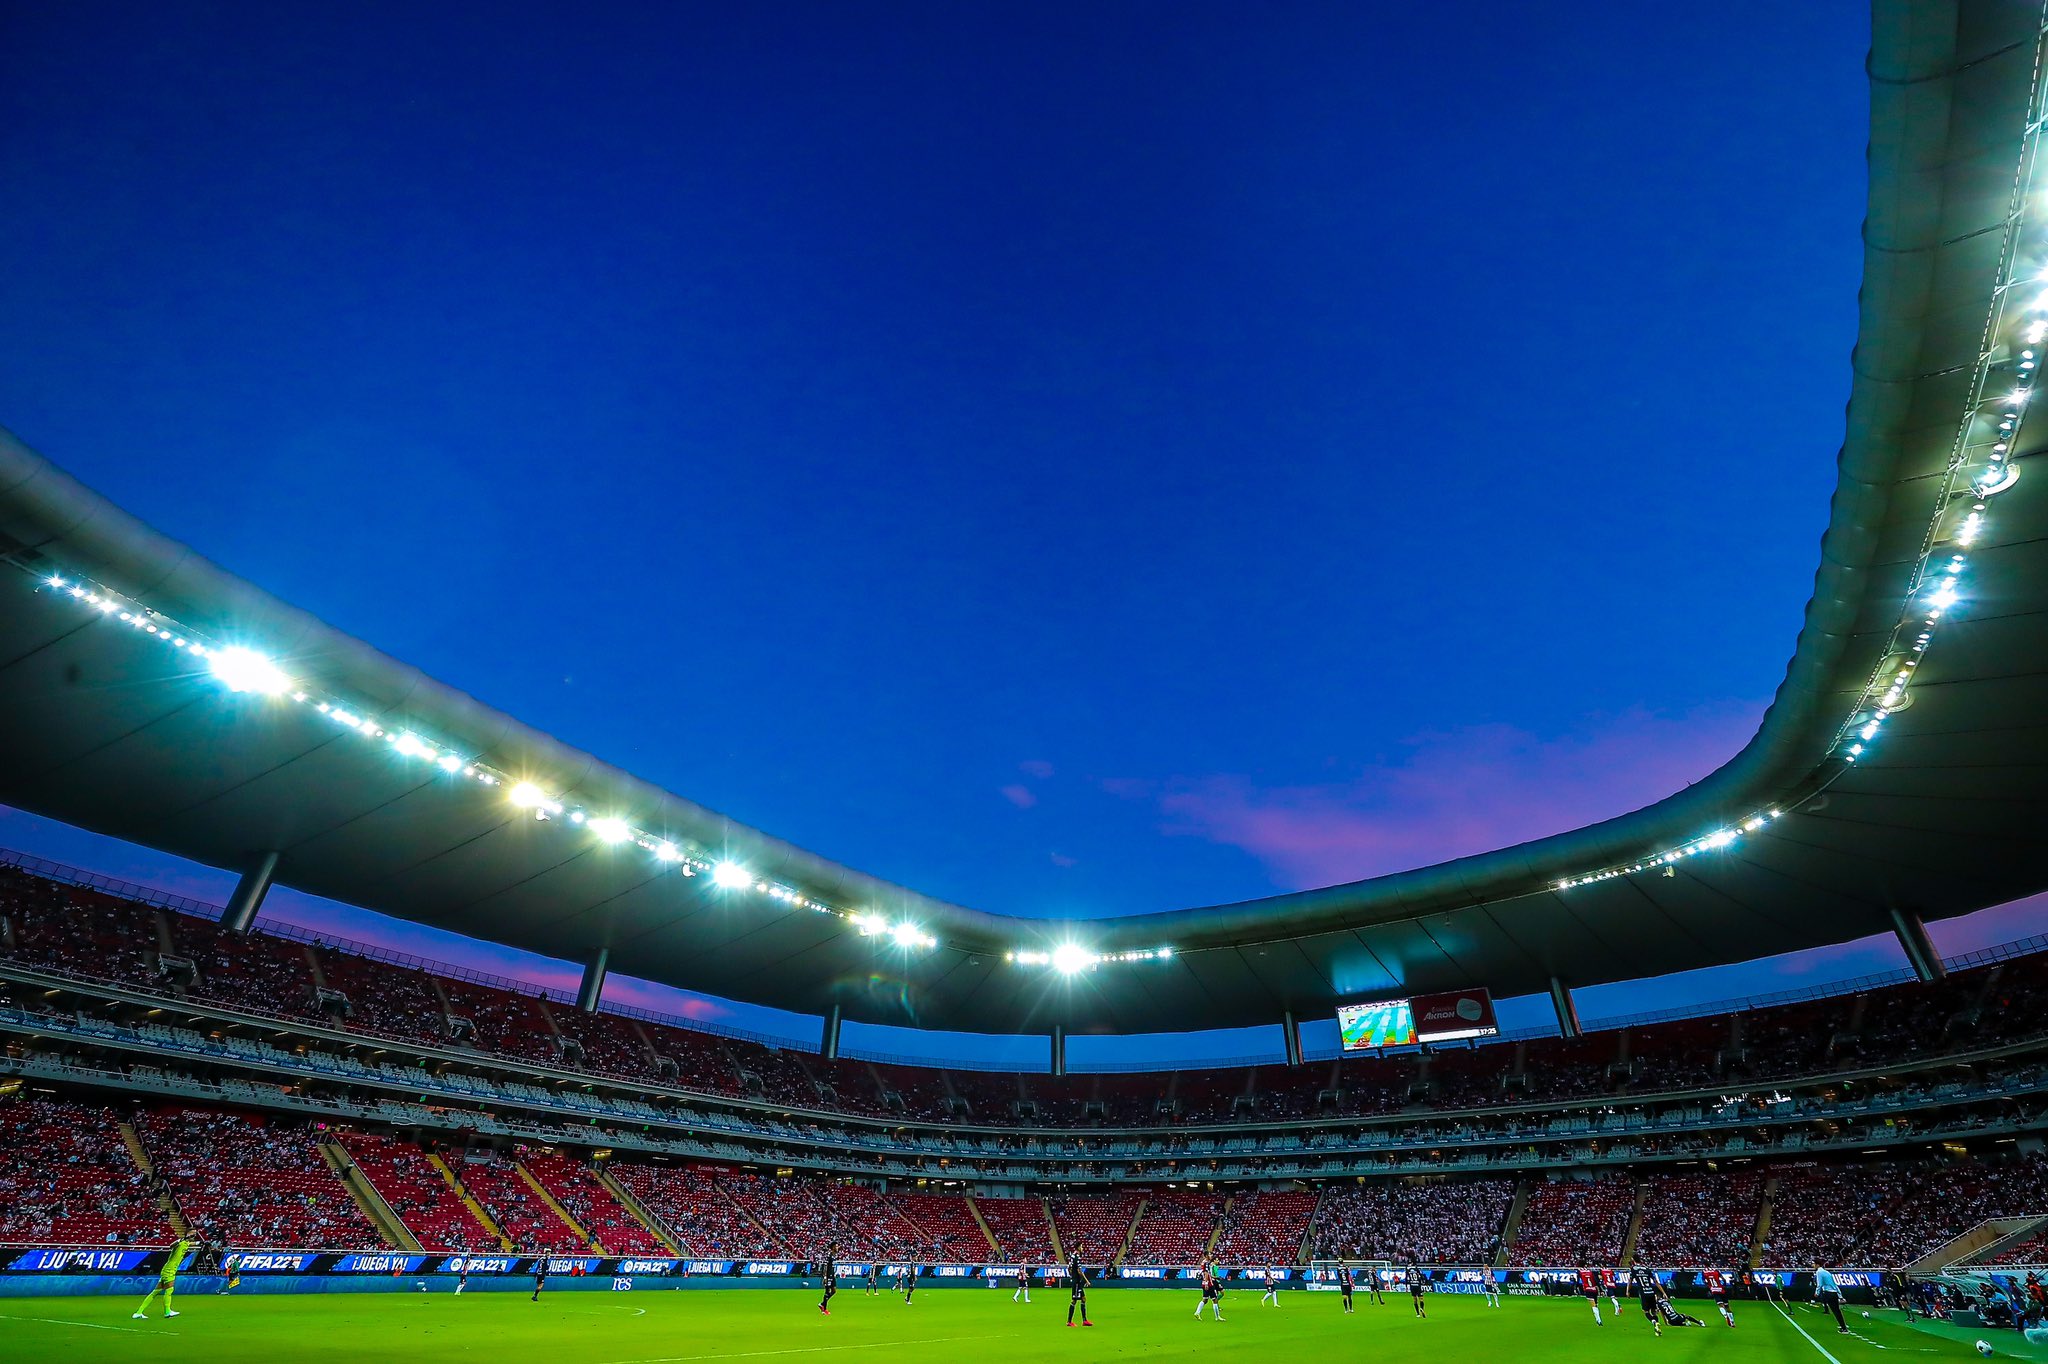 El estadio Akron de Chivas en Jalisco. Foto: Twtiter Chivas